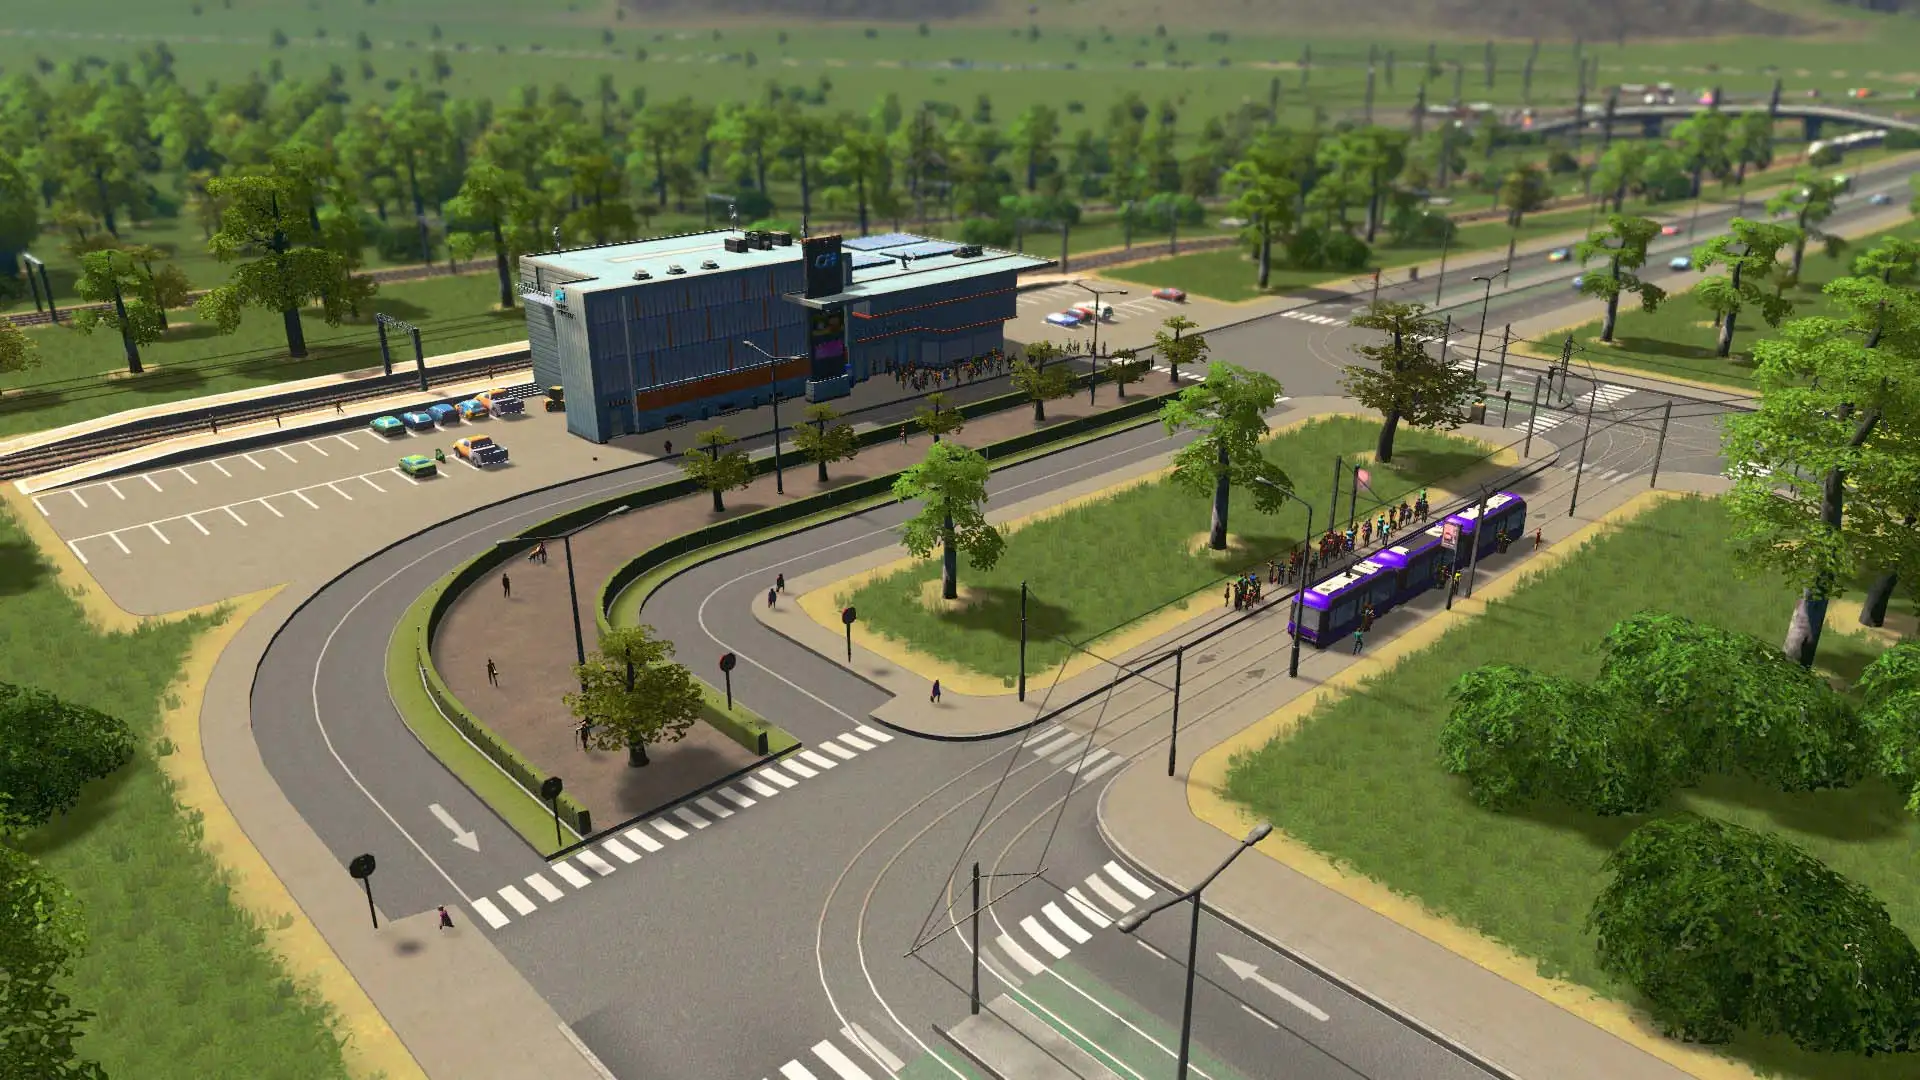 Tram and train hub